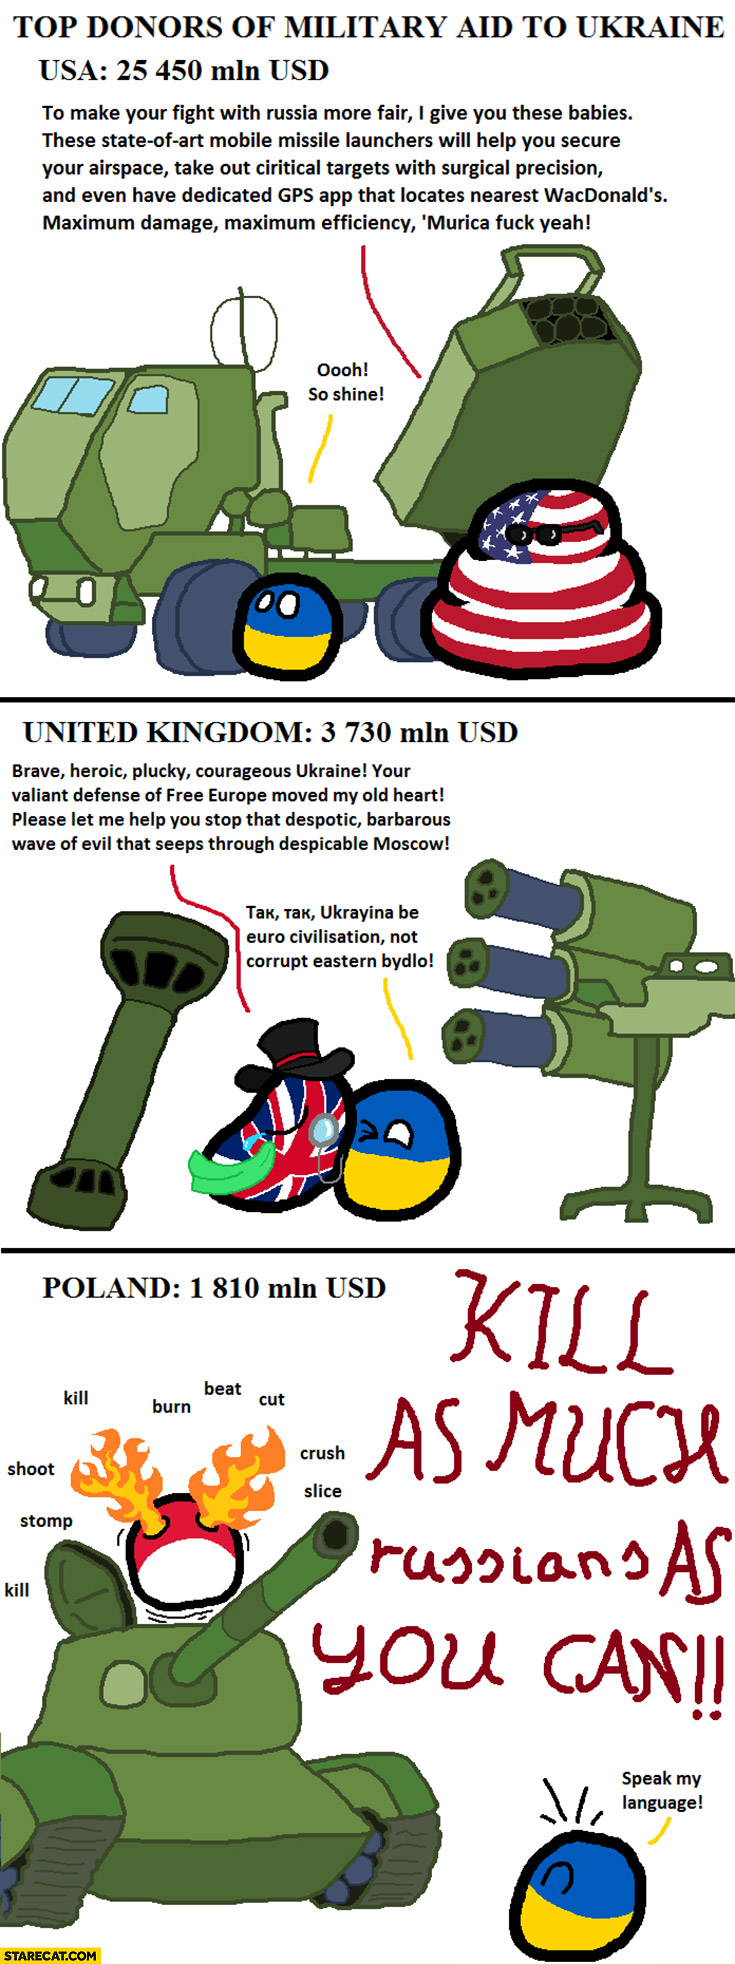 Top donors of military aid to Ukraine: USA, United Kingdom, Poland polandball